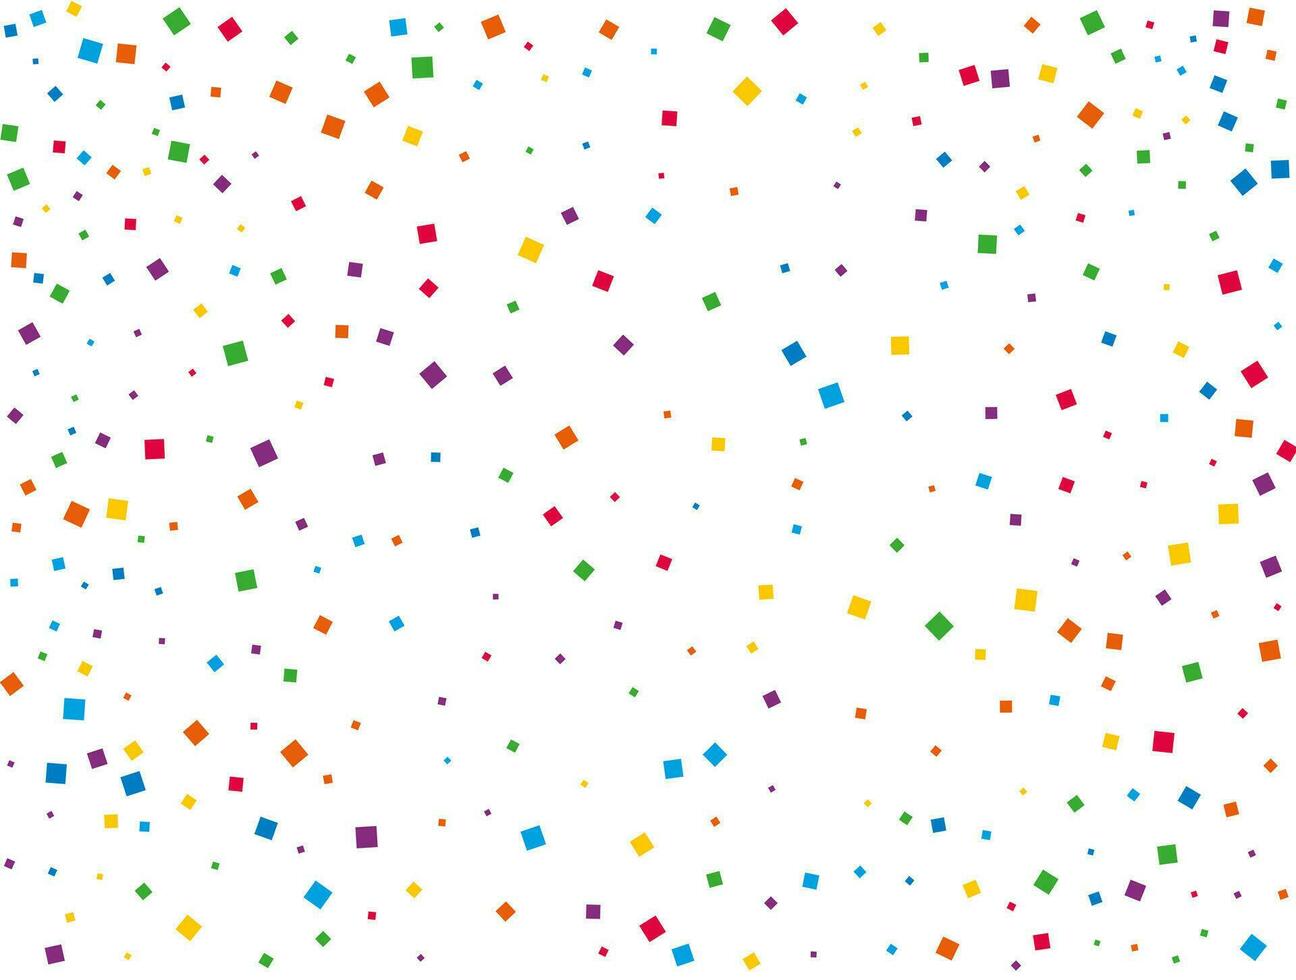 magie regenboog pleinen confetti. vector illustratie.